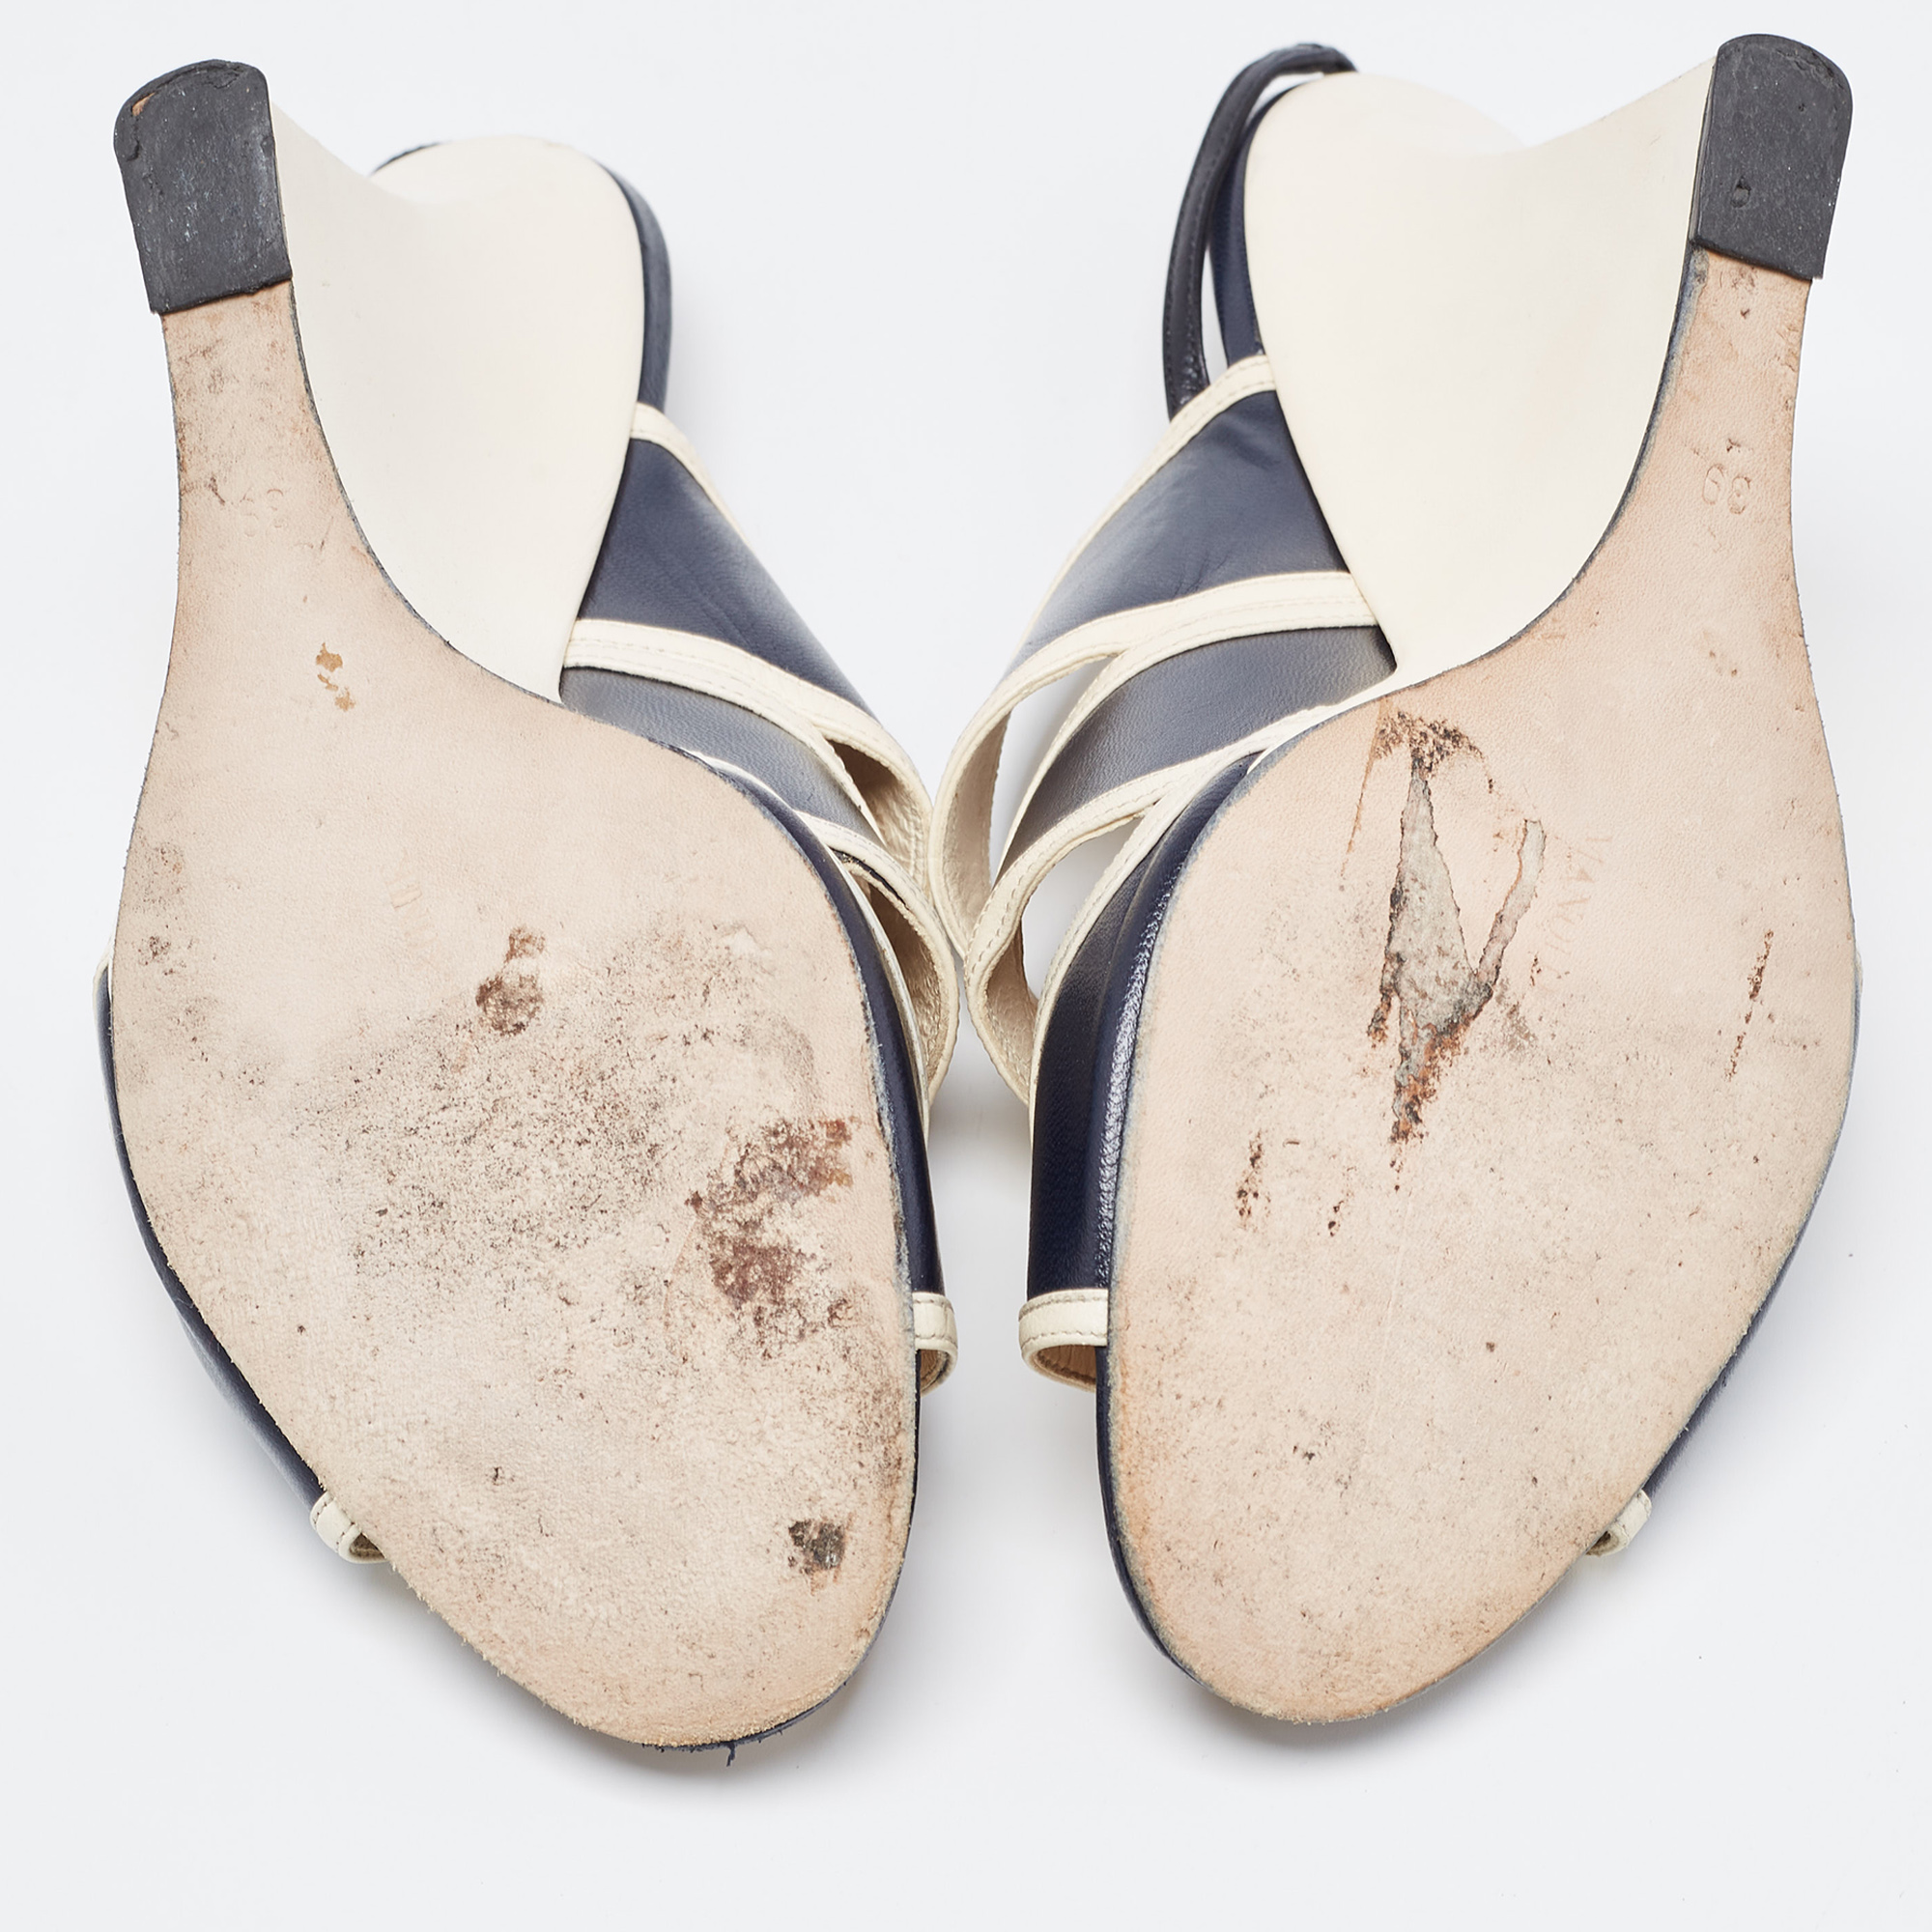 Manolo Blahnik Cream/Blue Leather Wedge Slingback Sandals Size 39